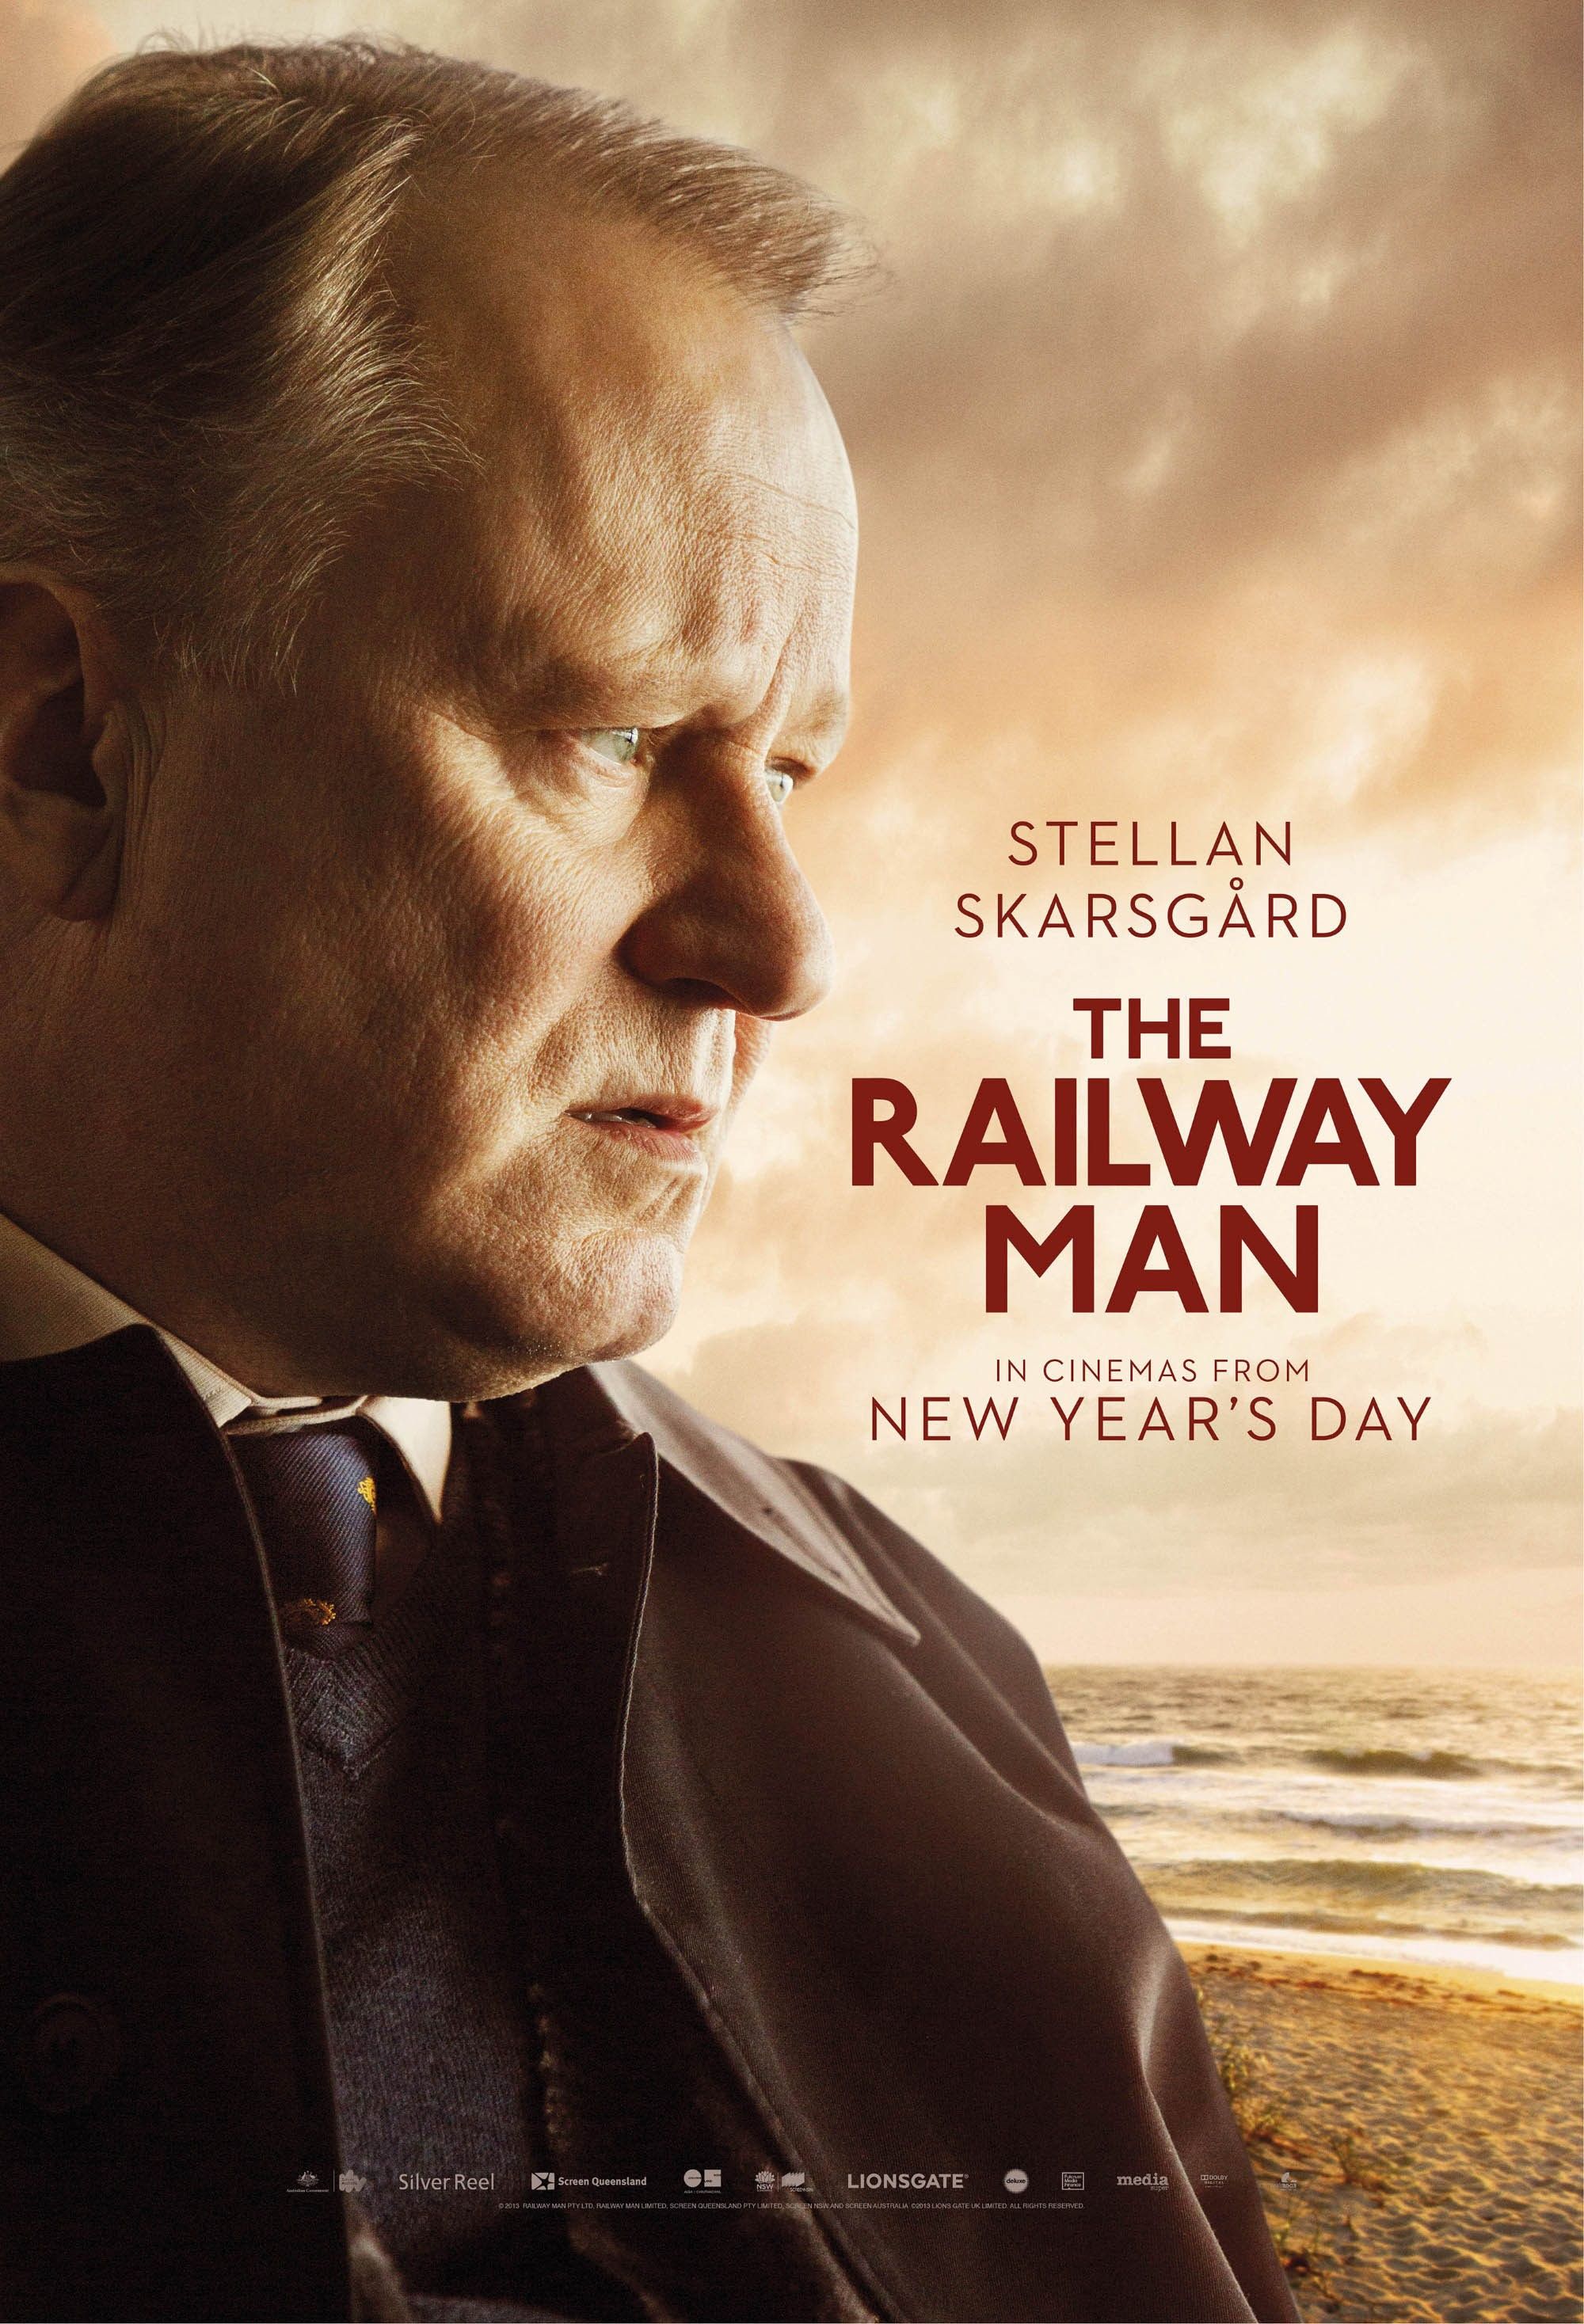 The Railway Man Stellan Skarsgard Character Poster